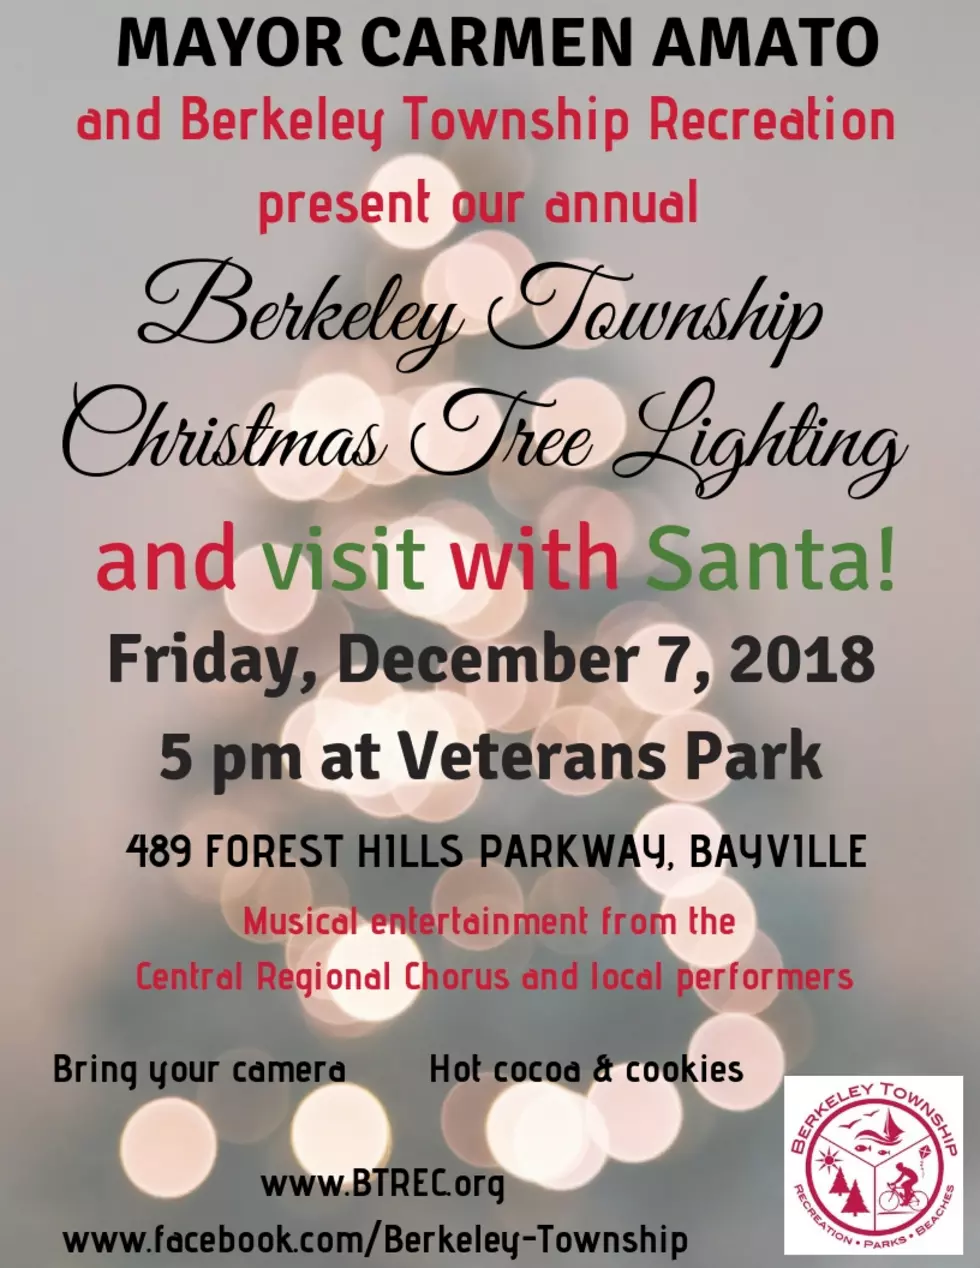 DATE CHANGE For Berkeley Township Christmas Tree Lighting 2018